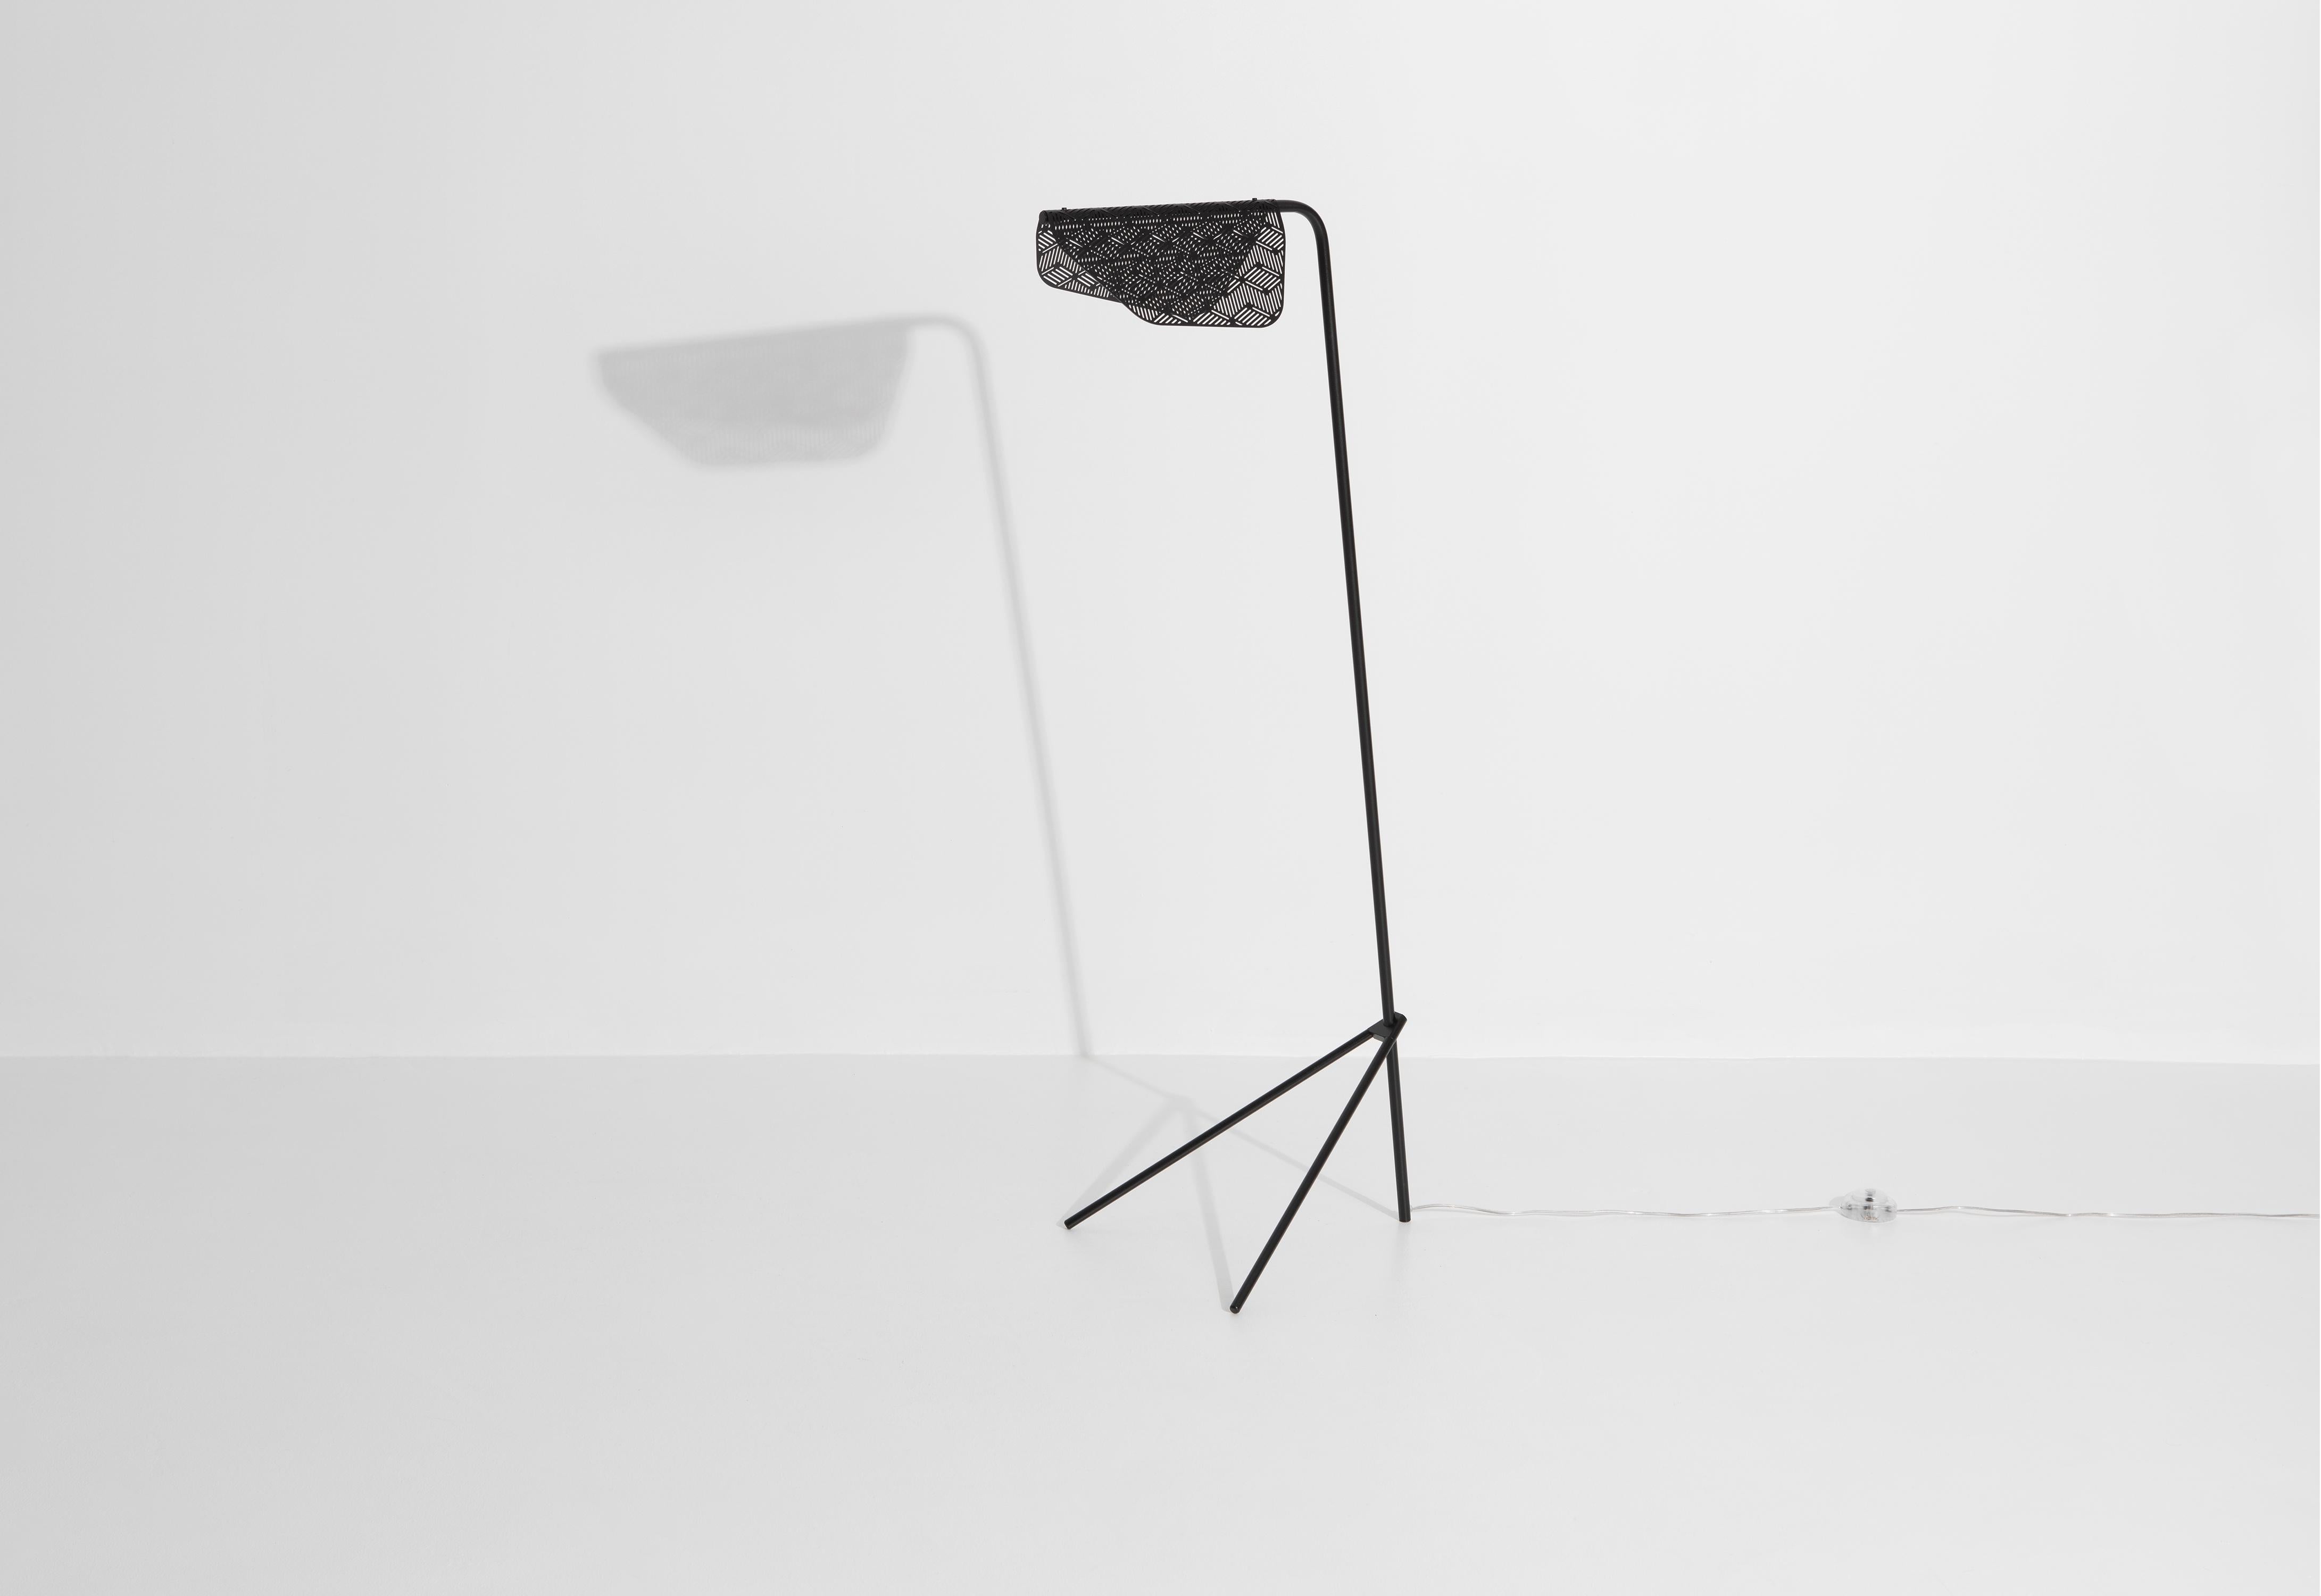 Contemporary Petite Friture Mediterranea Floor Lamp in Black by Noé Duchaufour-Lawrance, 2016 For Sale